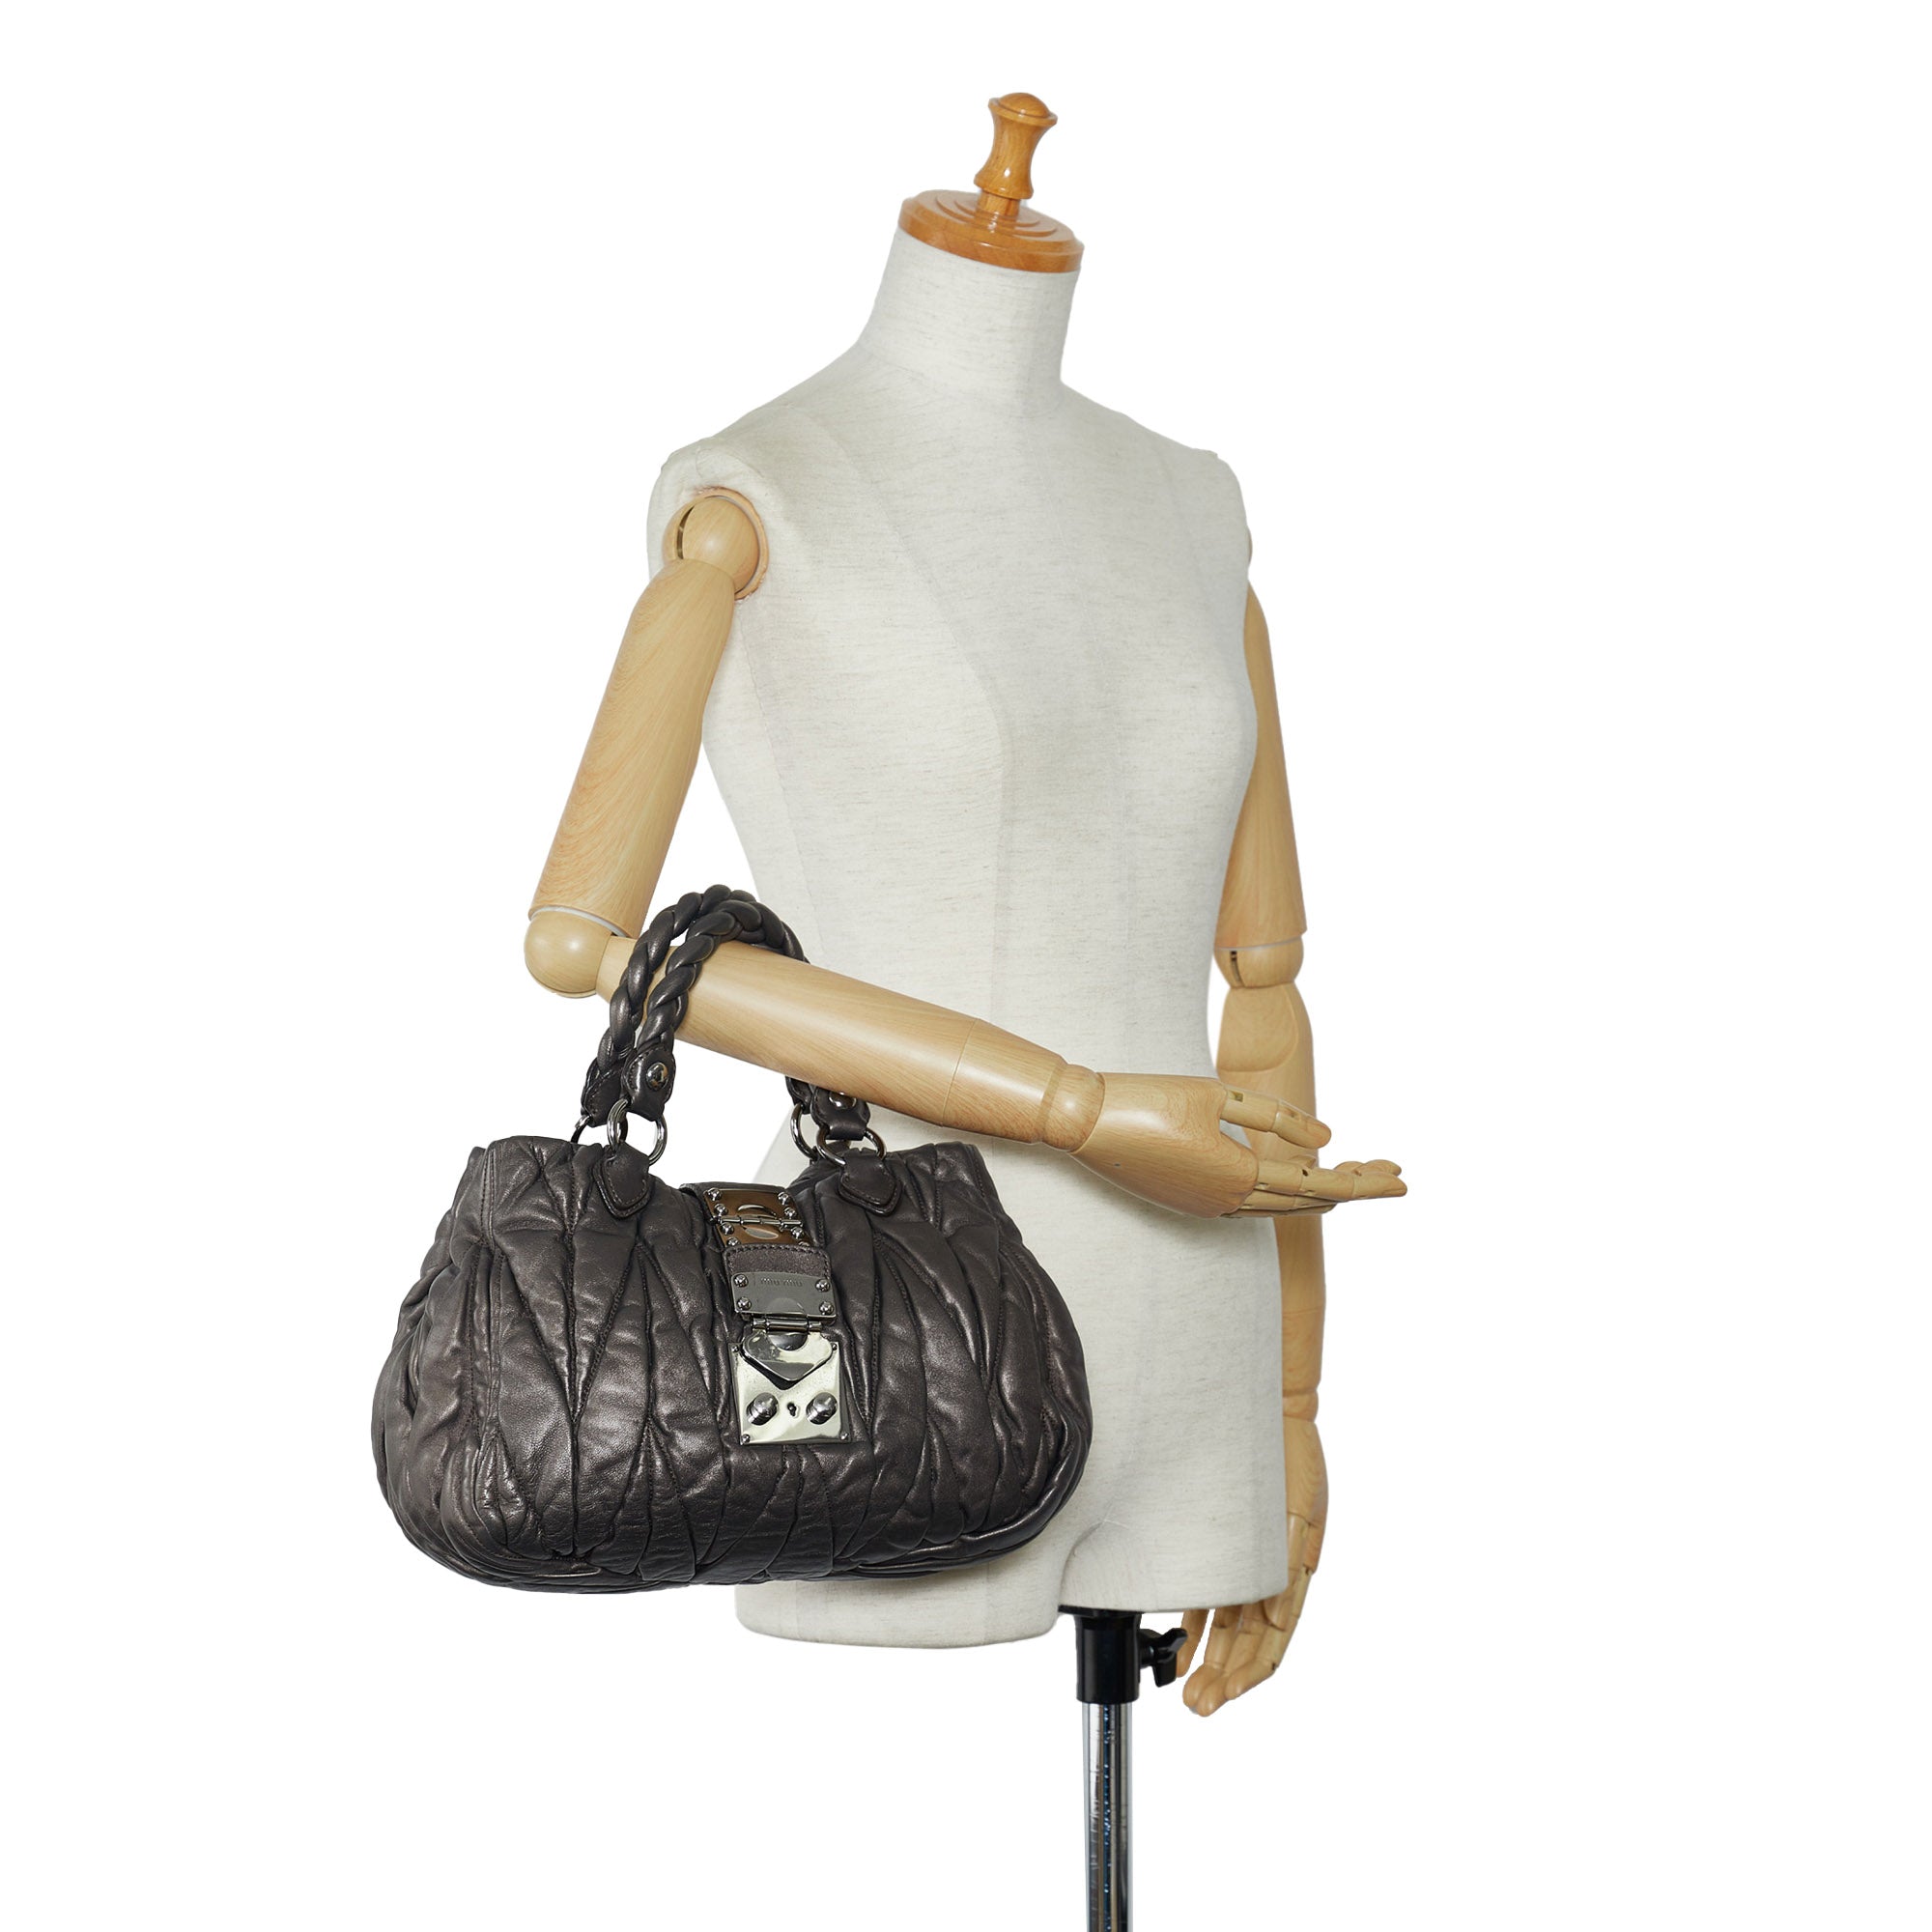 Miu Miu - Vintage Luxury Coffer Leather Shoulder Bag - Free Shipping